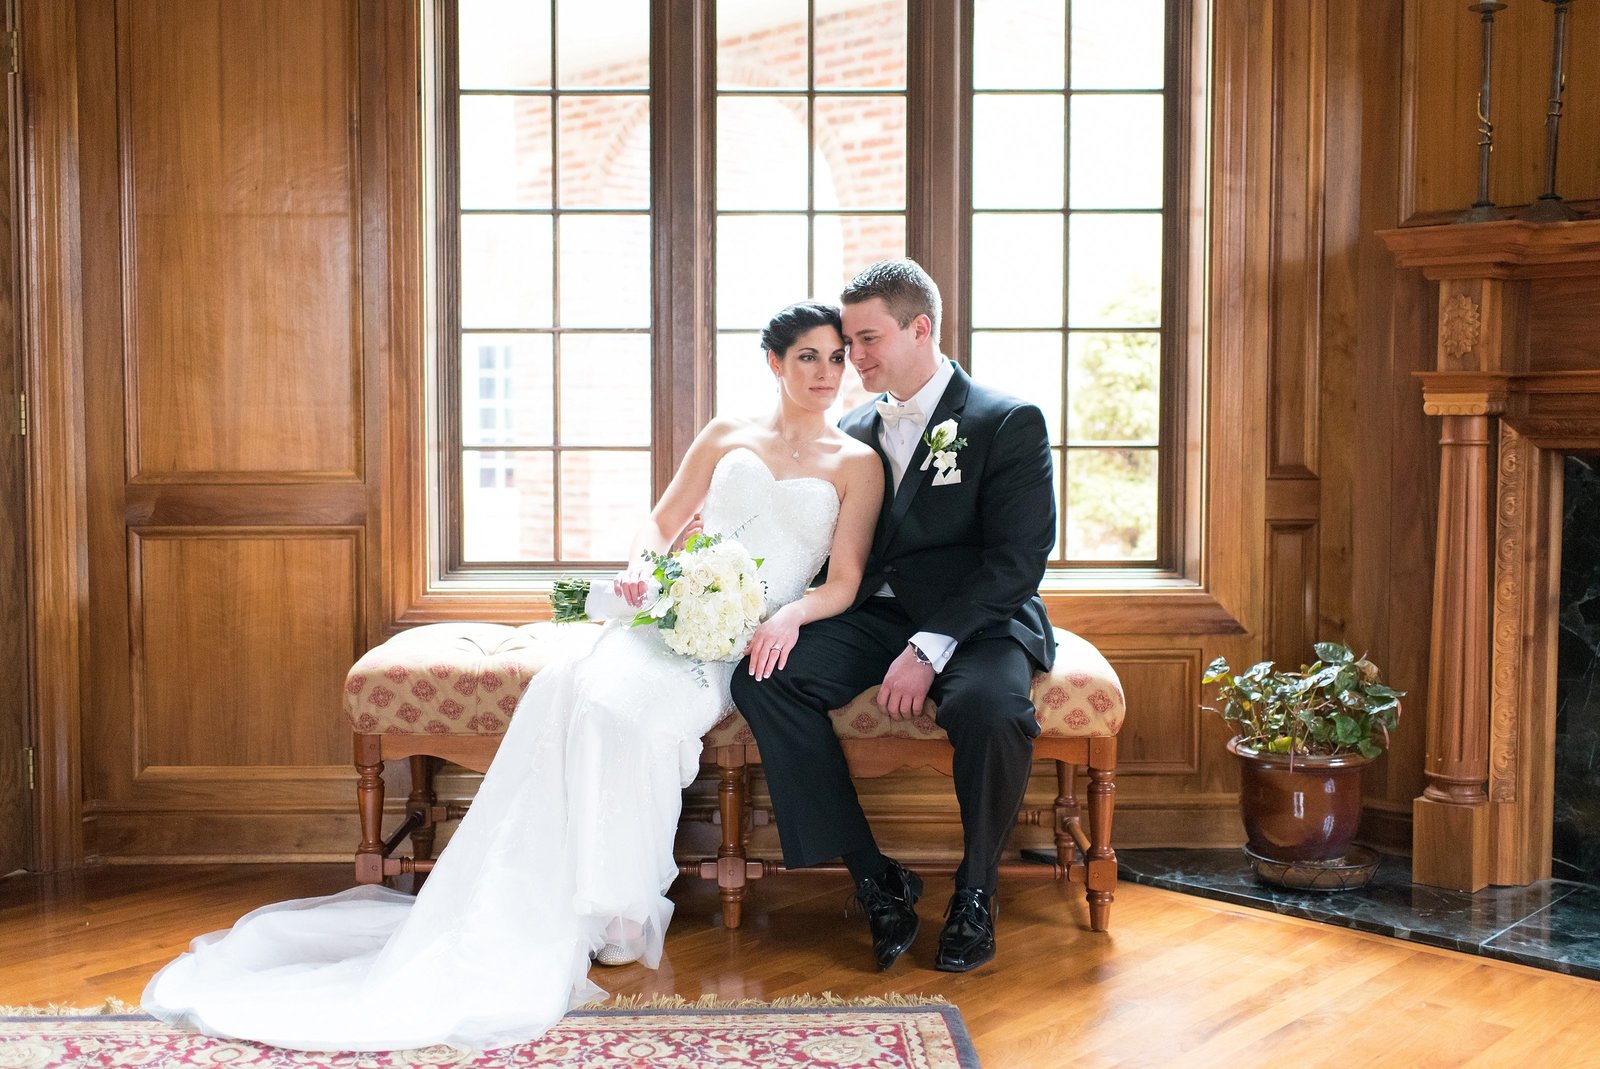 Classic Indoor Bride and Groom Wedding Wood Mantle Photo